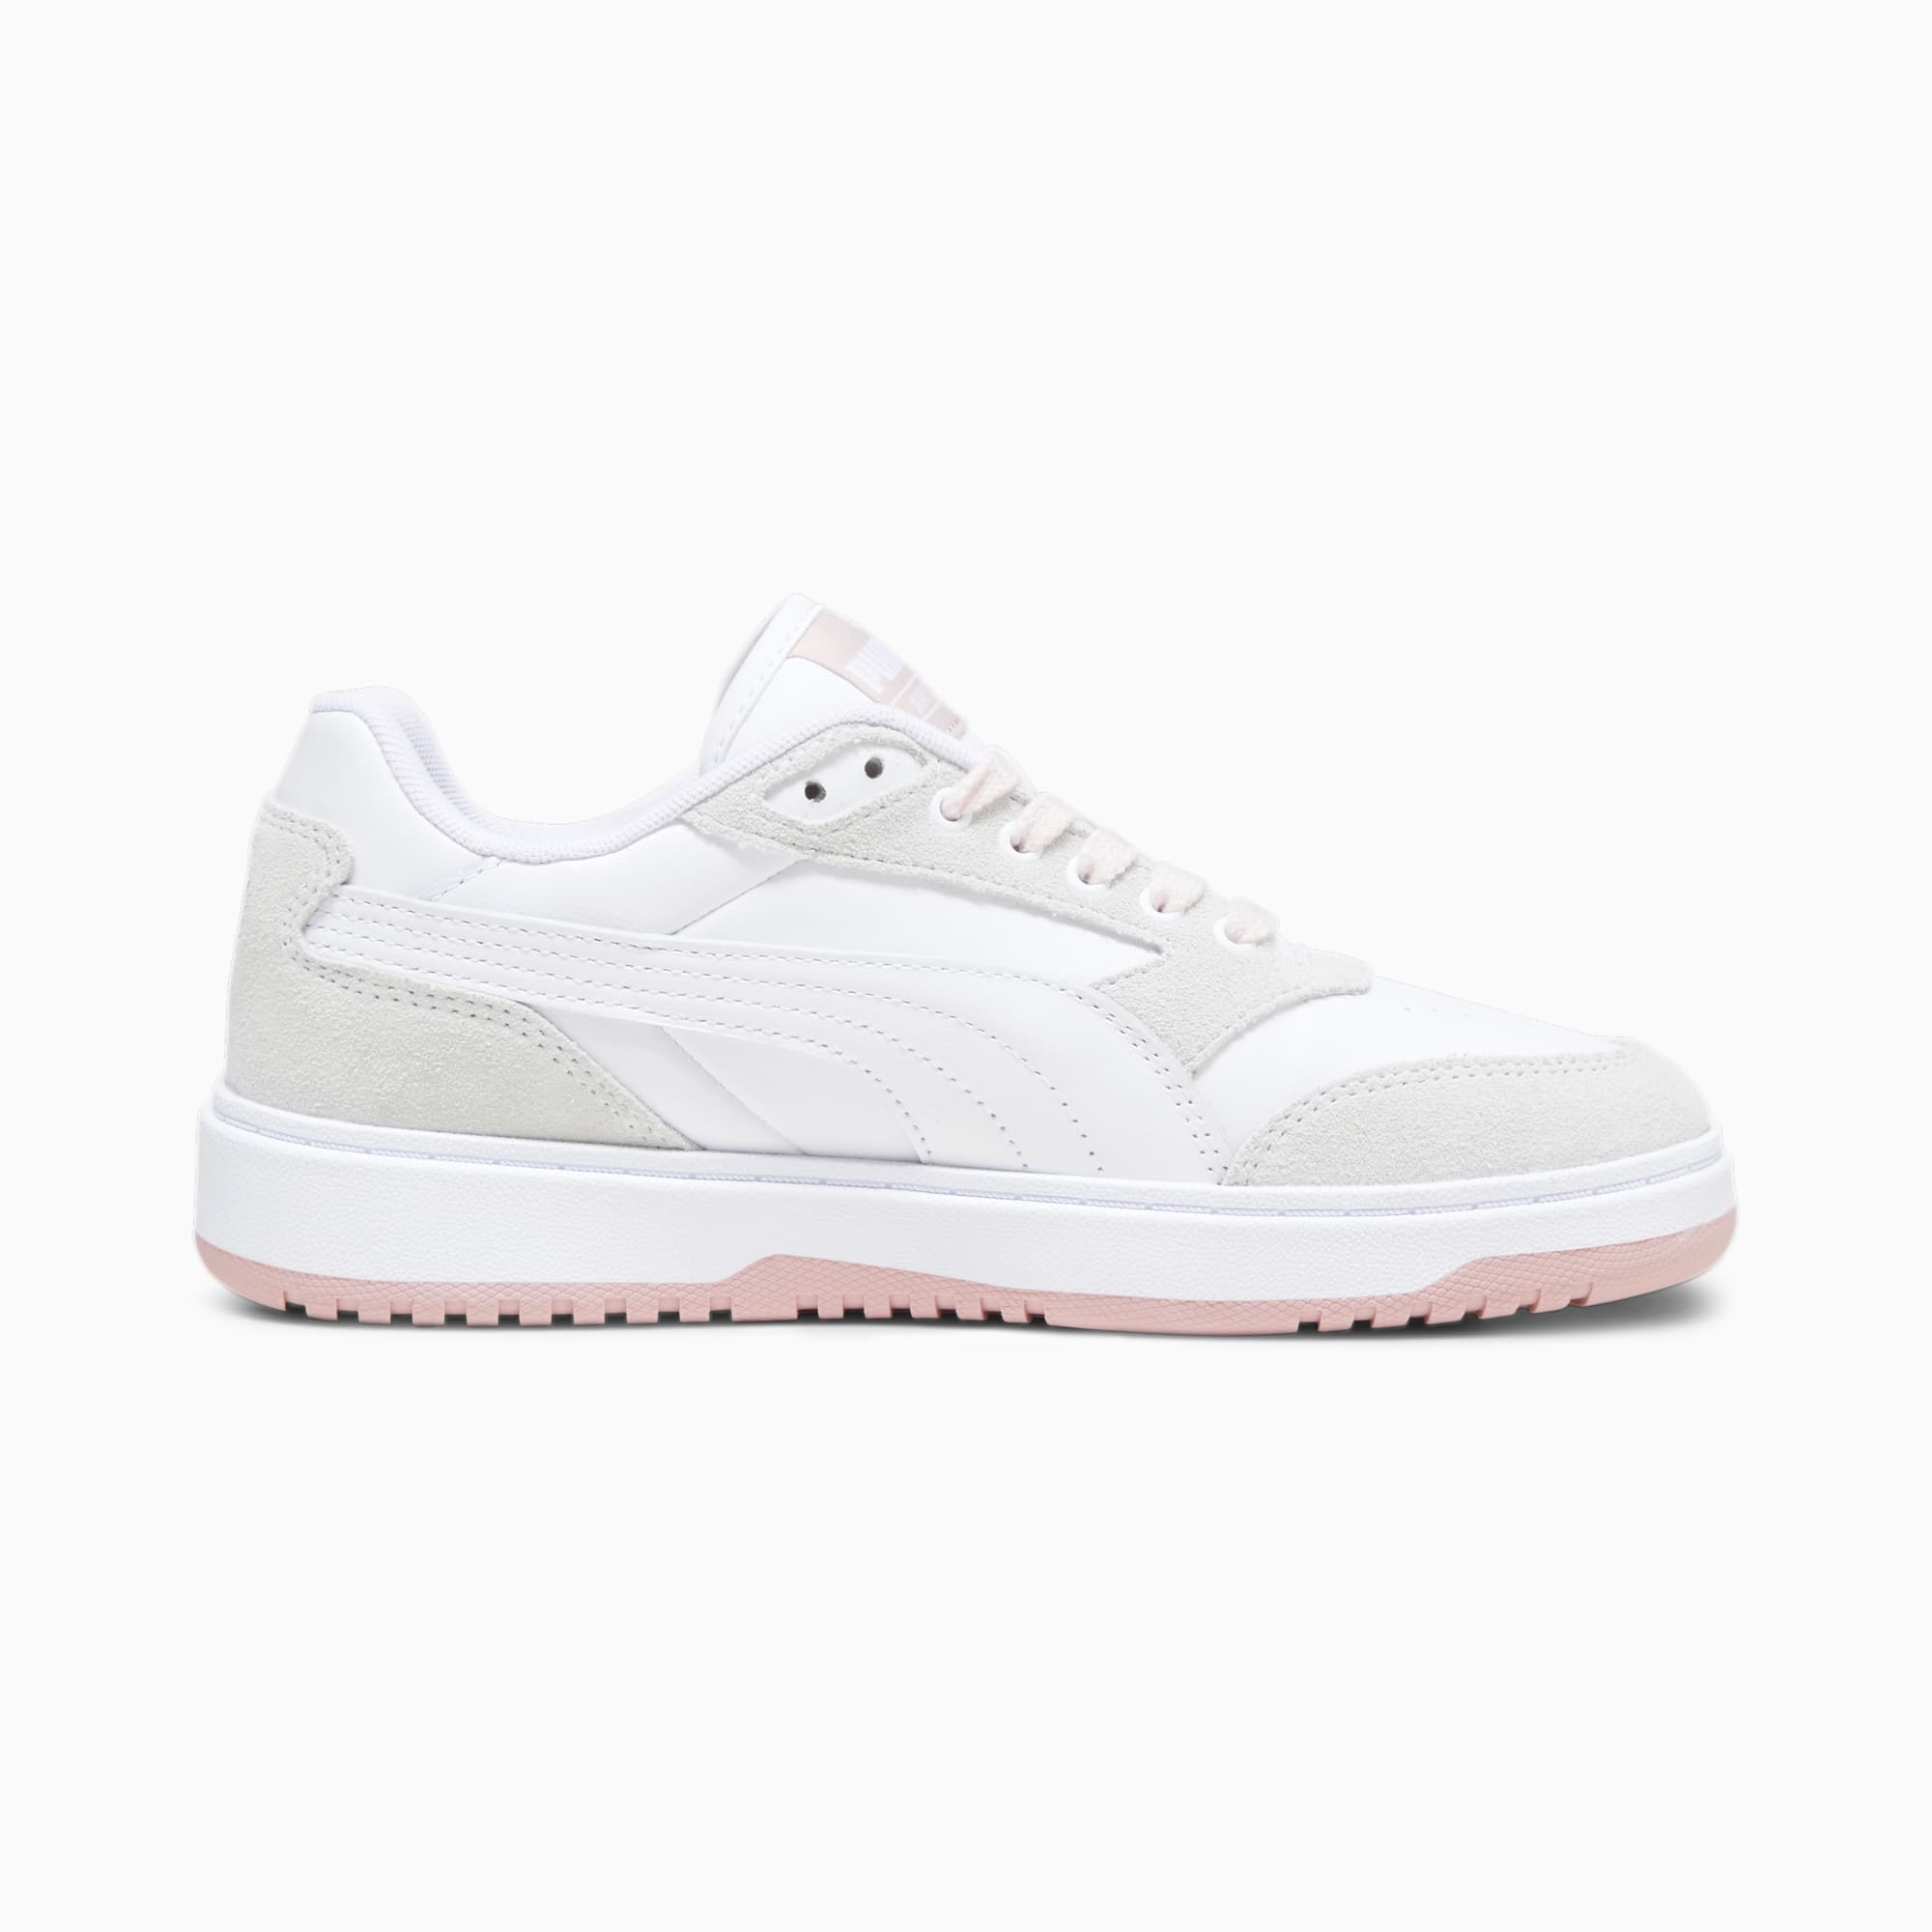 PUMA Doublecourt Women's Sneakers, White/Future Pink